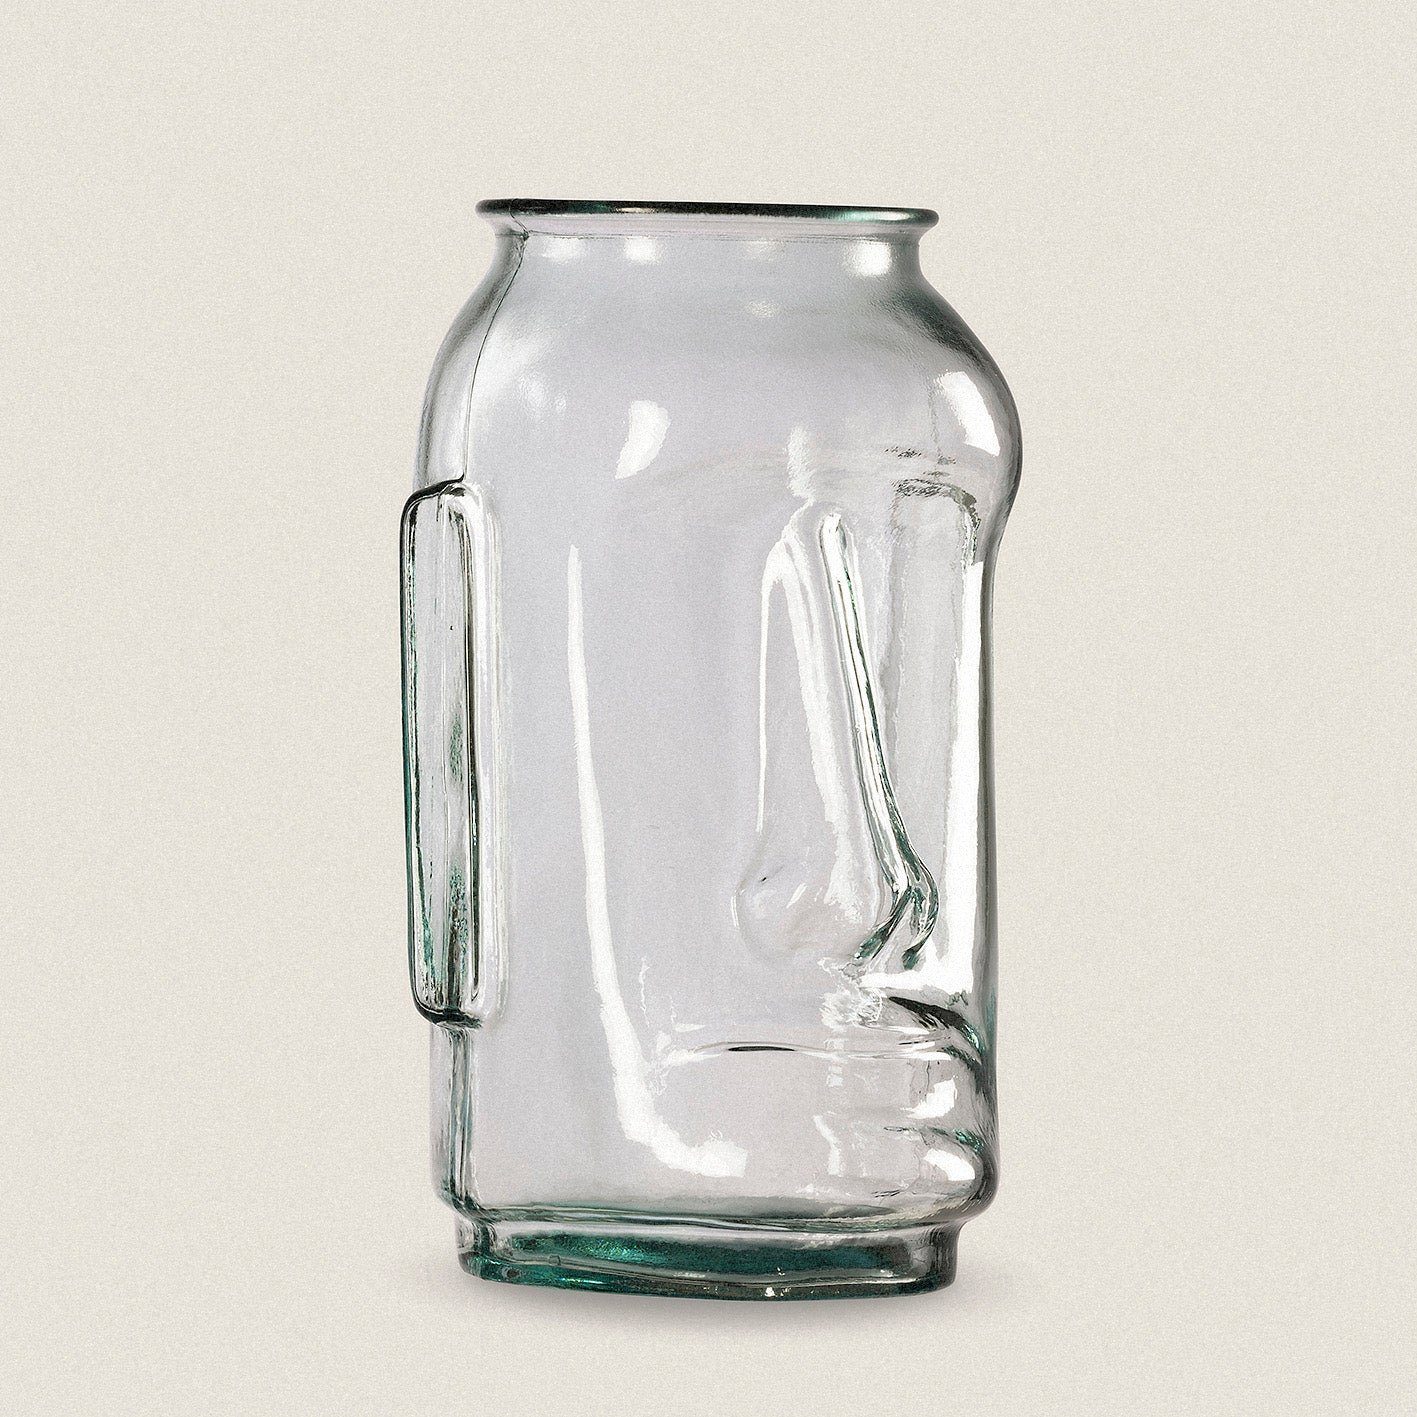 100 up % the "Small Tischvase Altglas way Vase Viny",